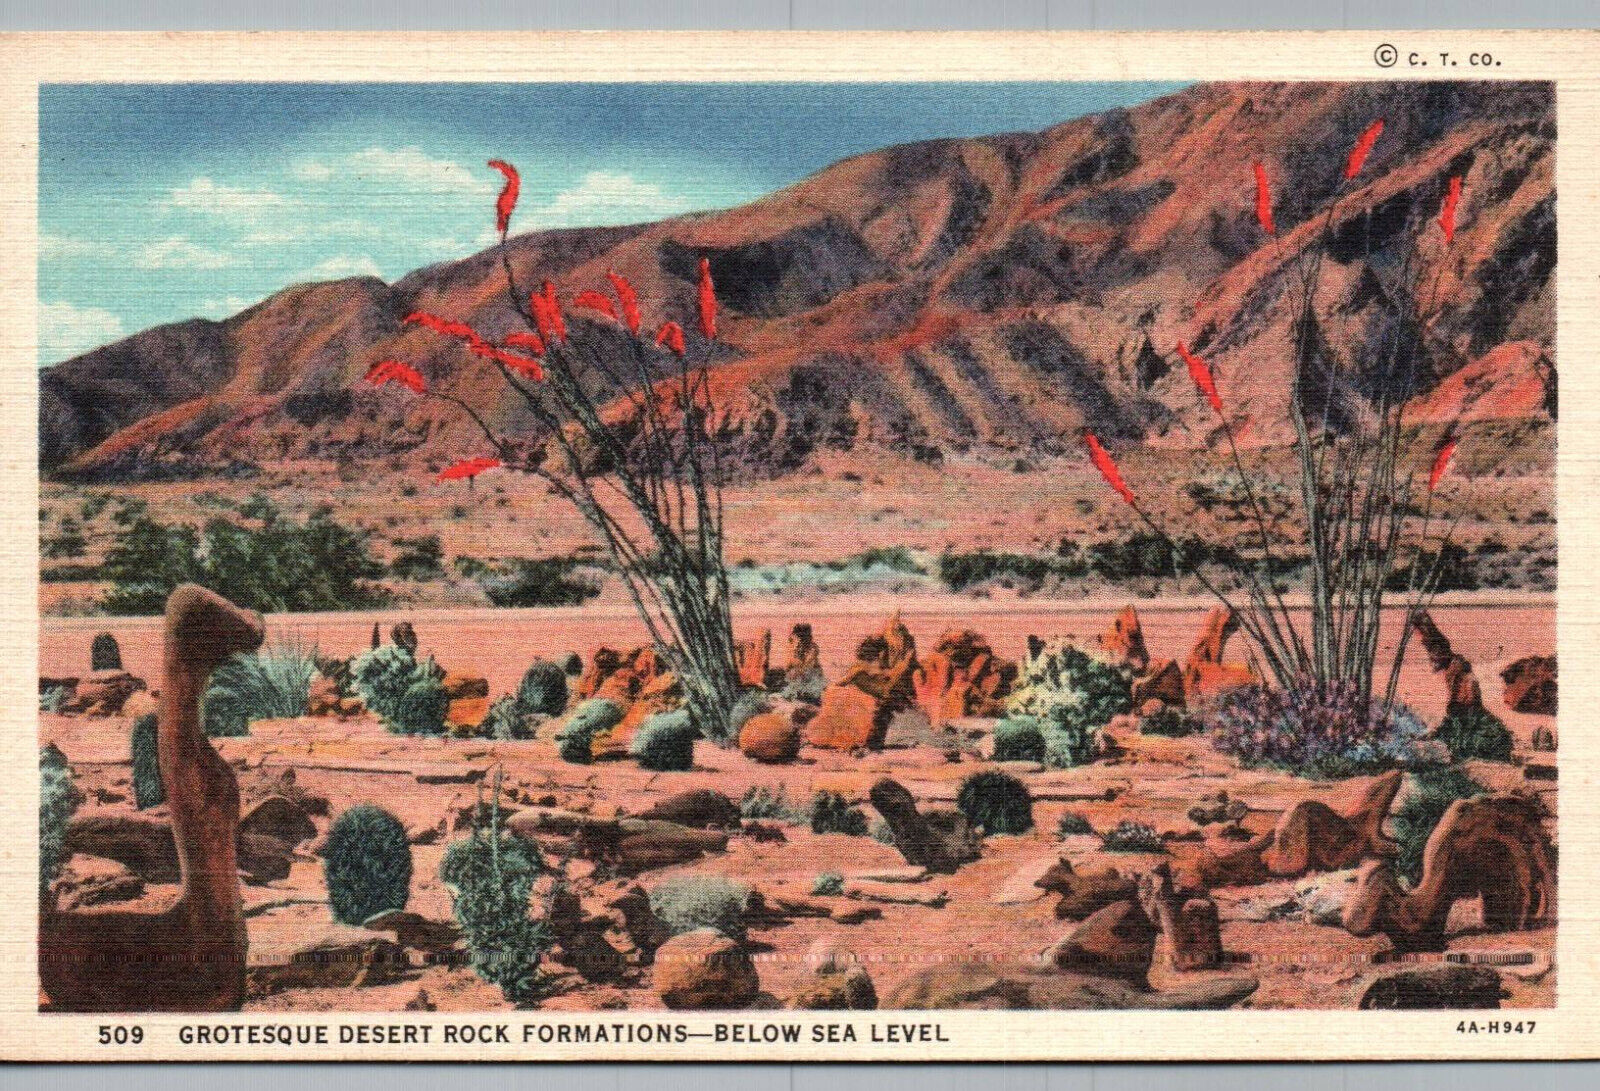 Vintage Linen Postcard View of Grotesque Desert Rock Formations Below Sea Level